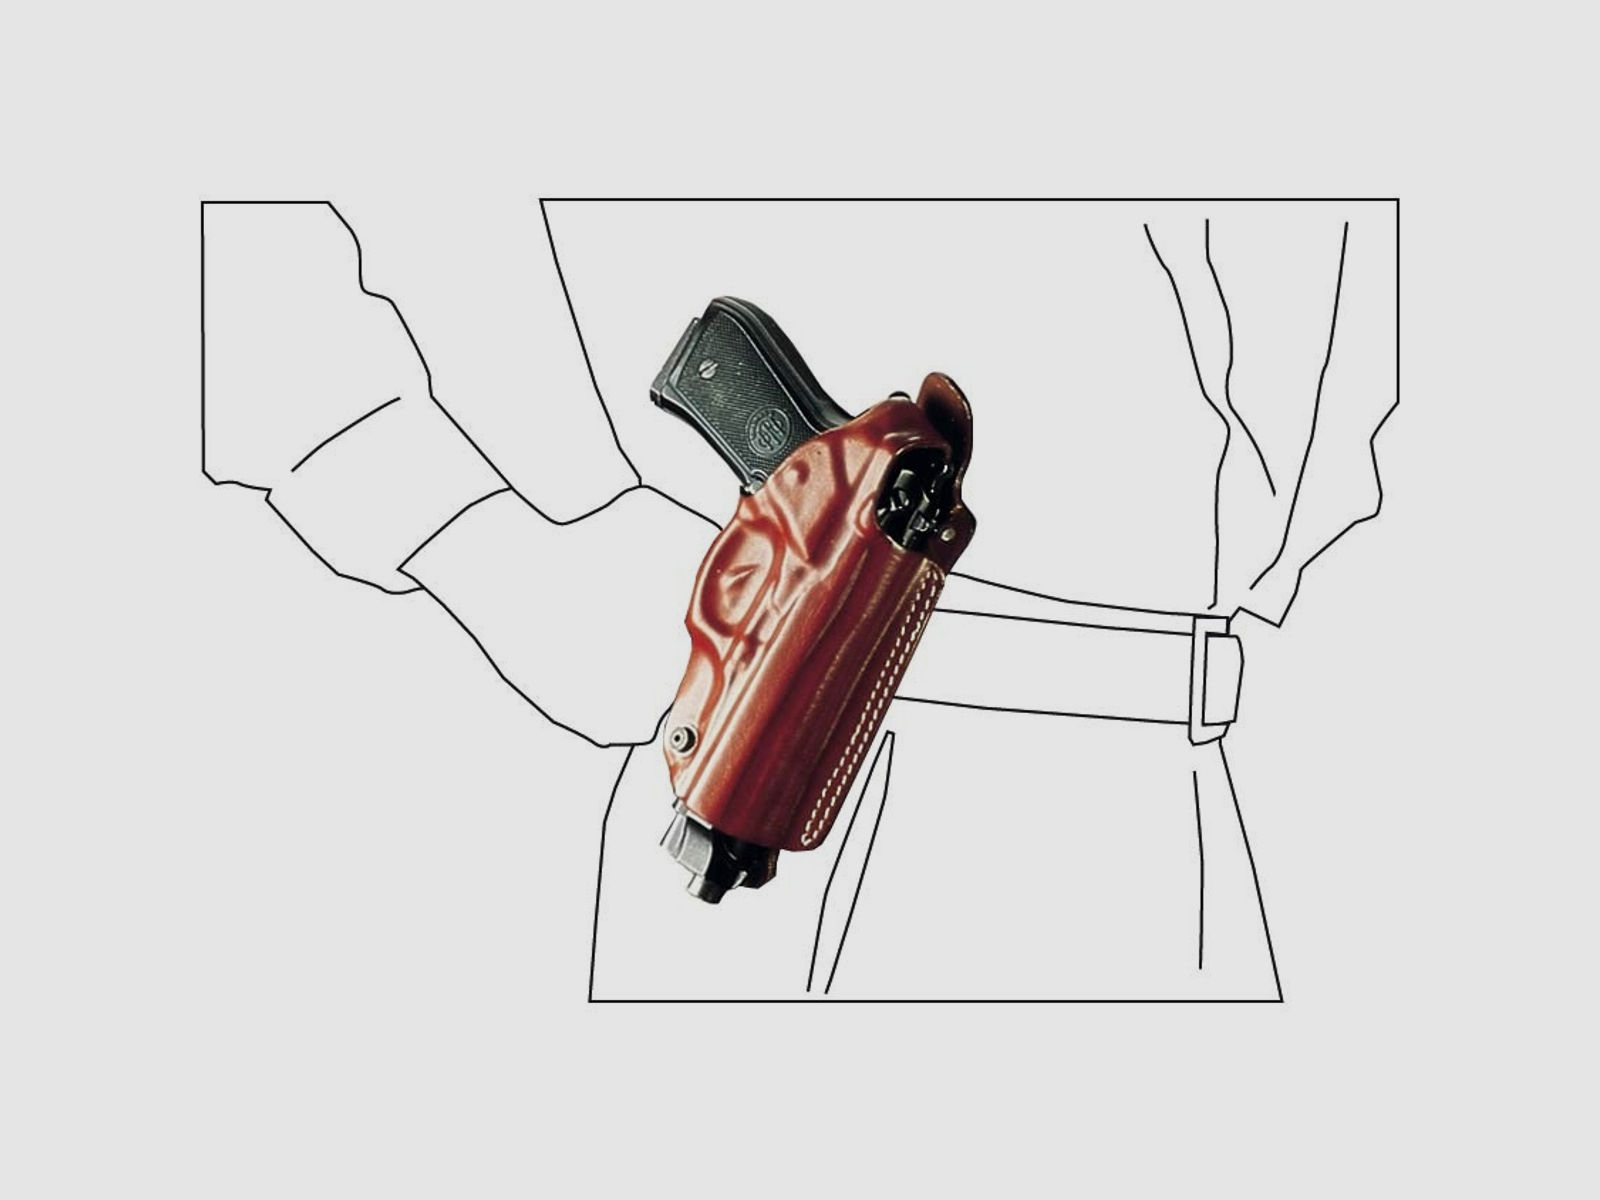 Mehrzweck-Schulterholster/Gürtelholster "Miami" Glock 29/30/36, H&K USP Compact, P30-Braun-Linkshänder